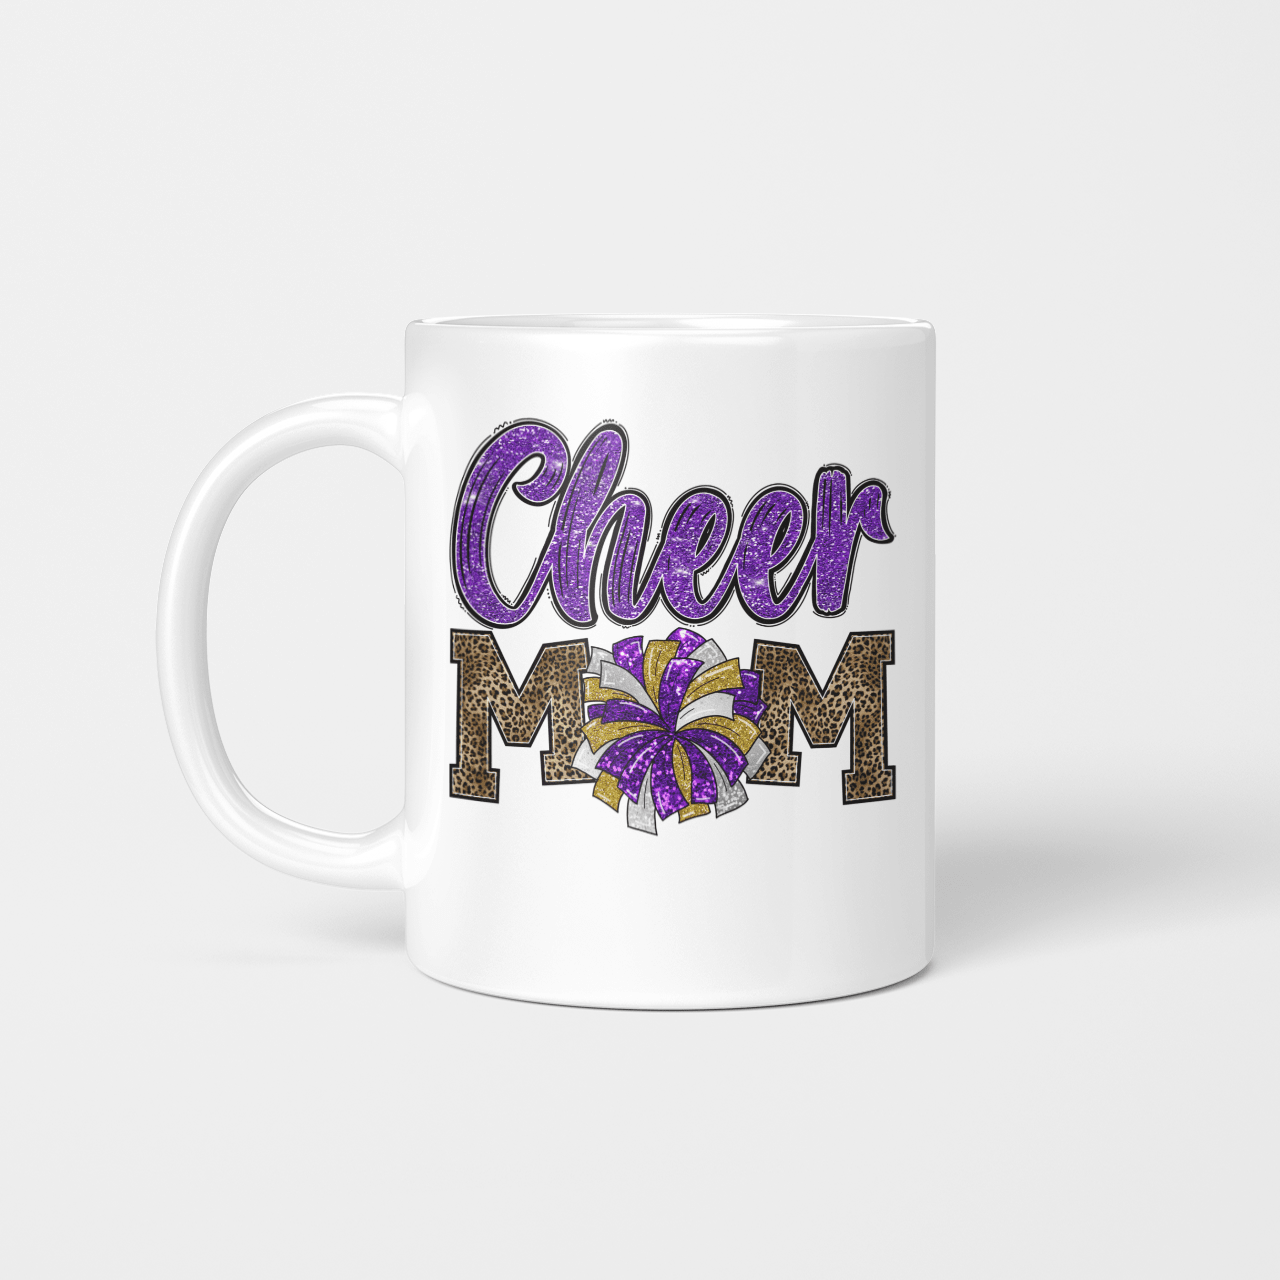 Cheer Mom Purple mug